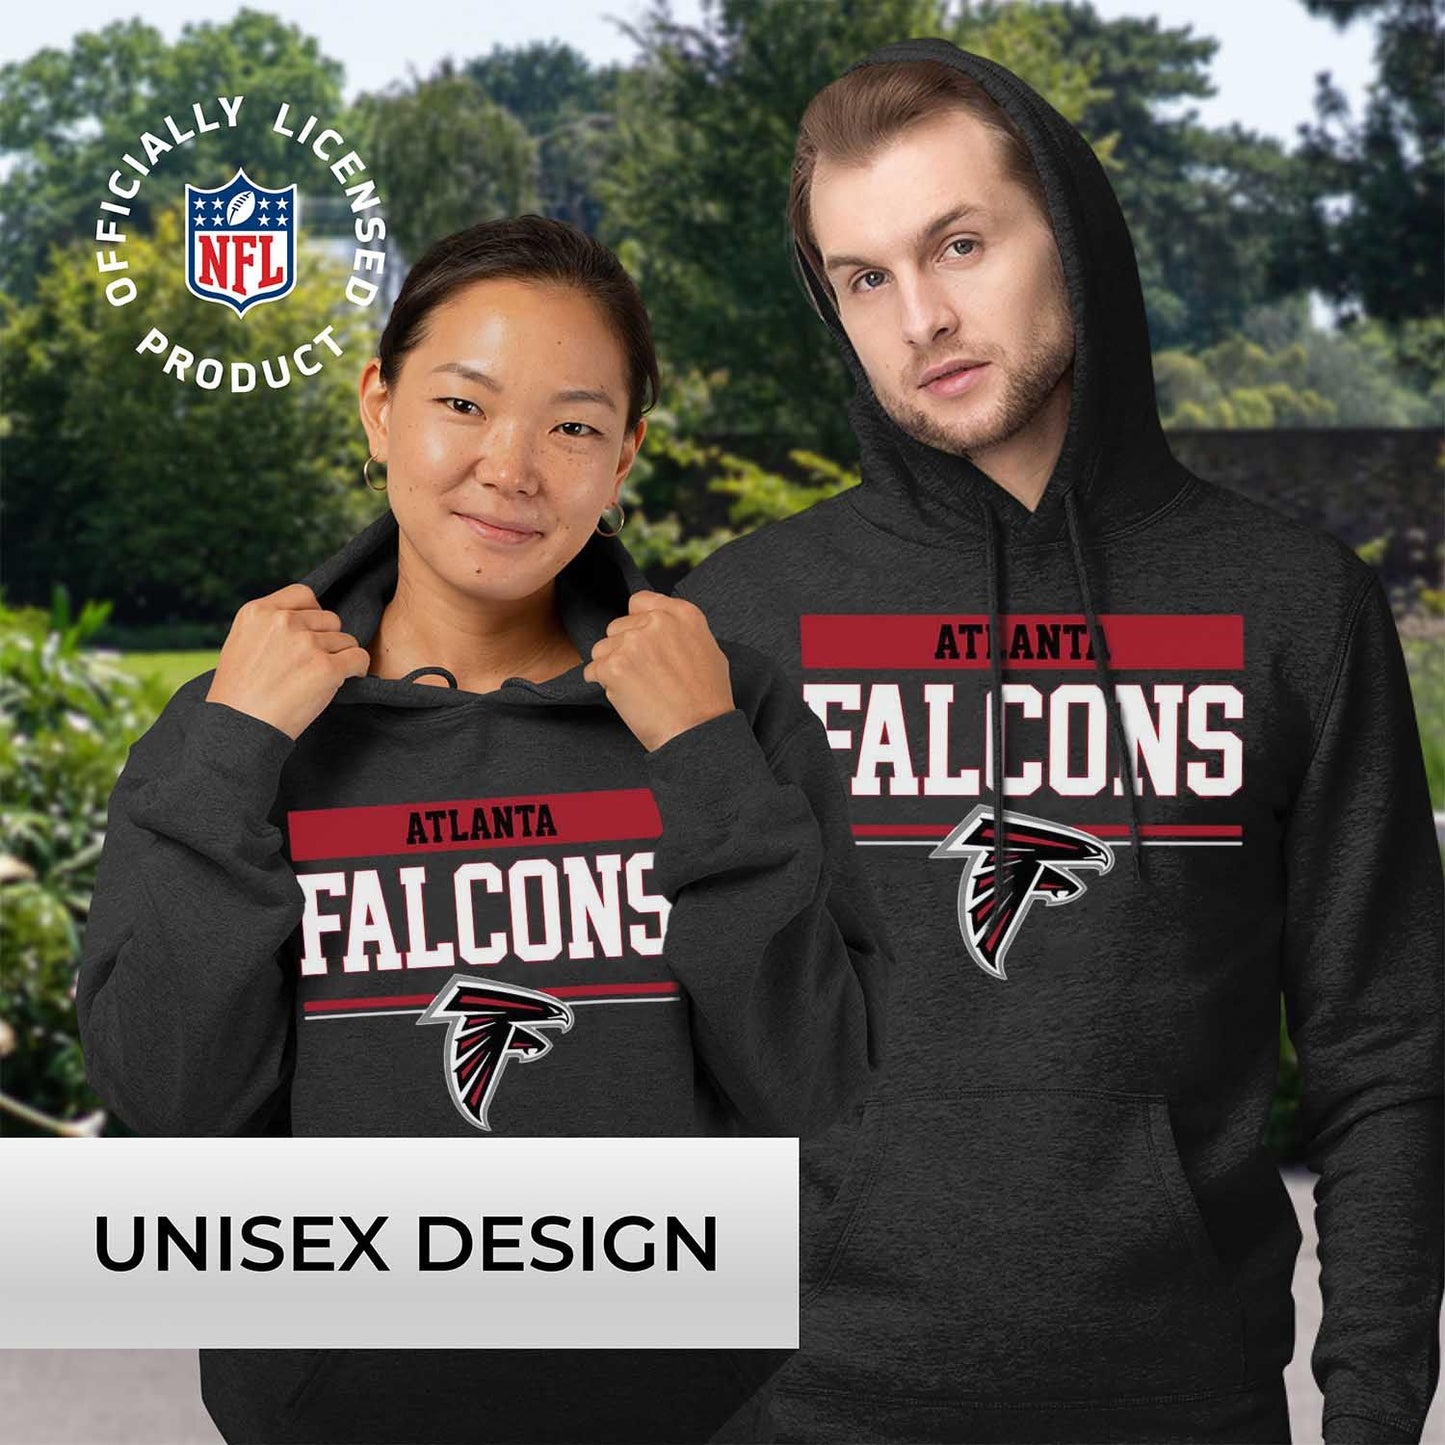 Atlanta Falcons NFL Adult Gameday Charcoal Hooded Sweatshirt - Charcoal